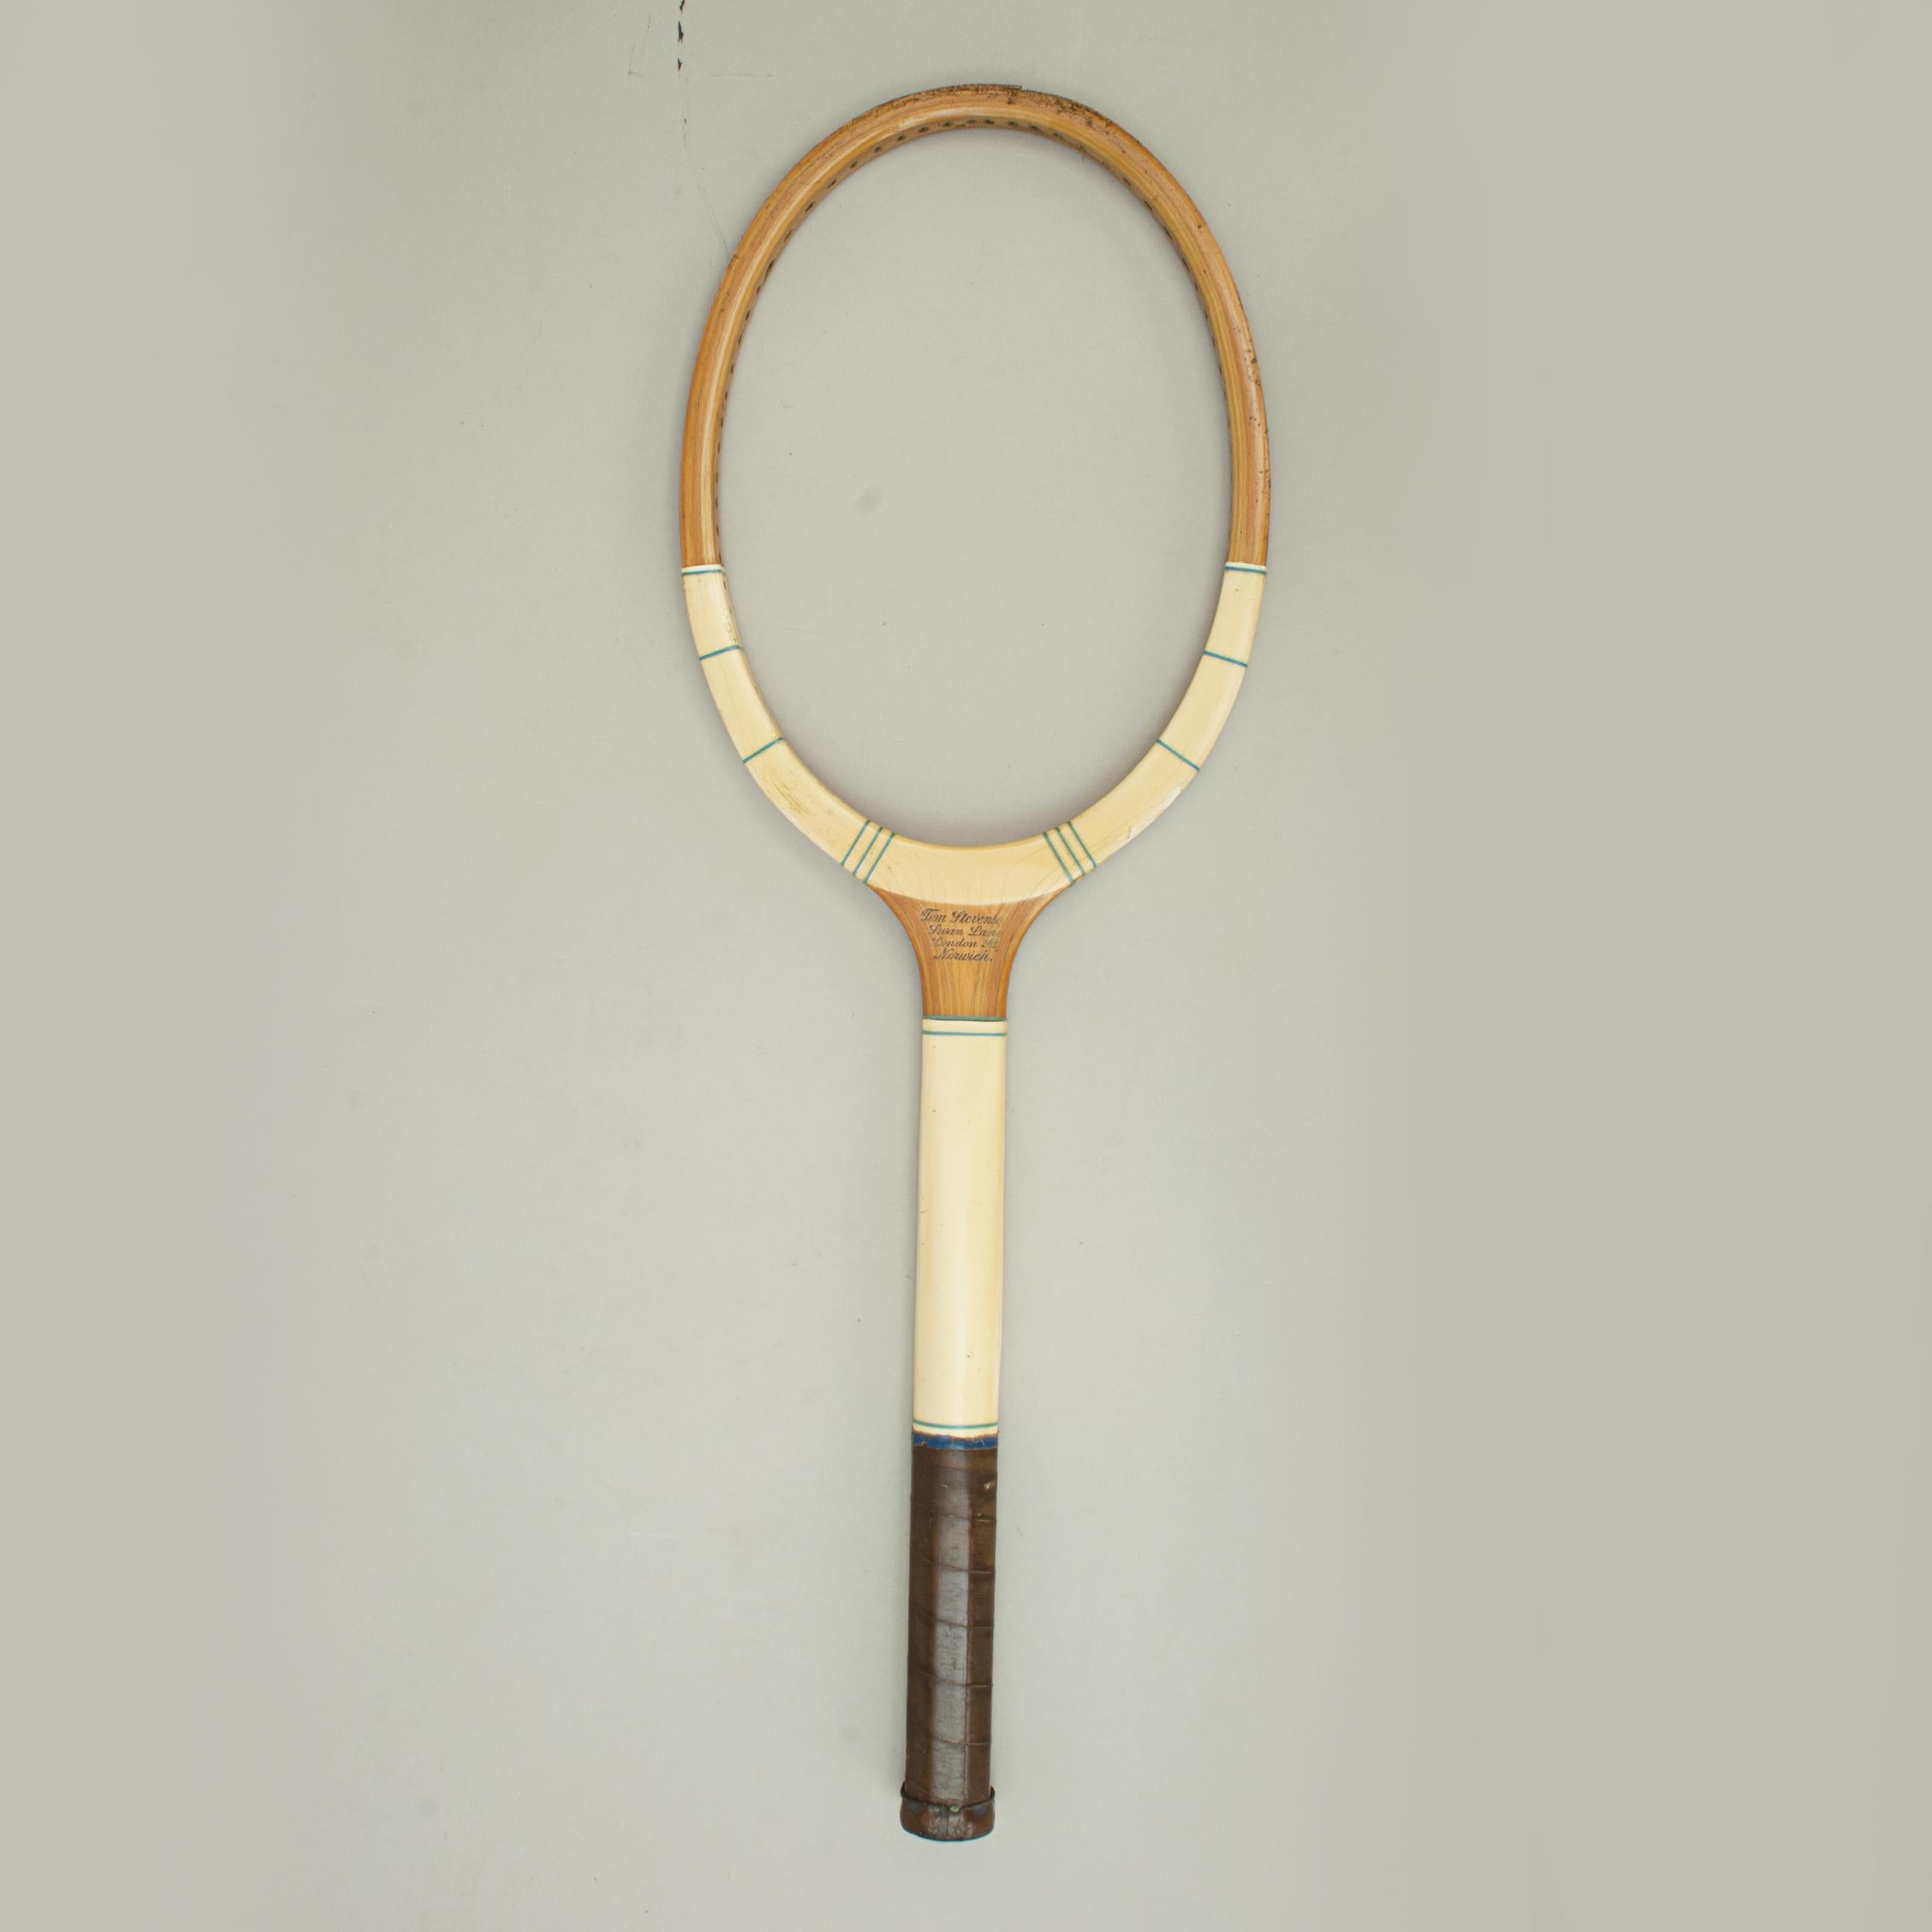 Vintage Lawn Tennis Racket, the Test by Stevenson 8